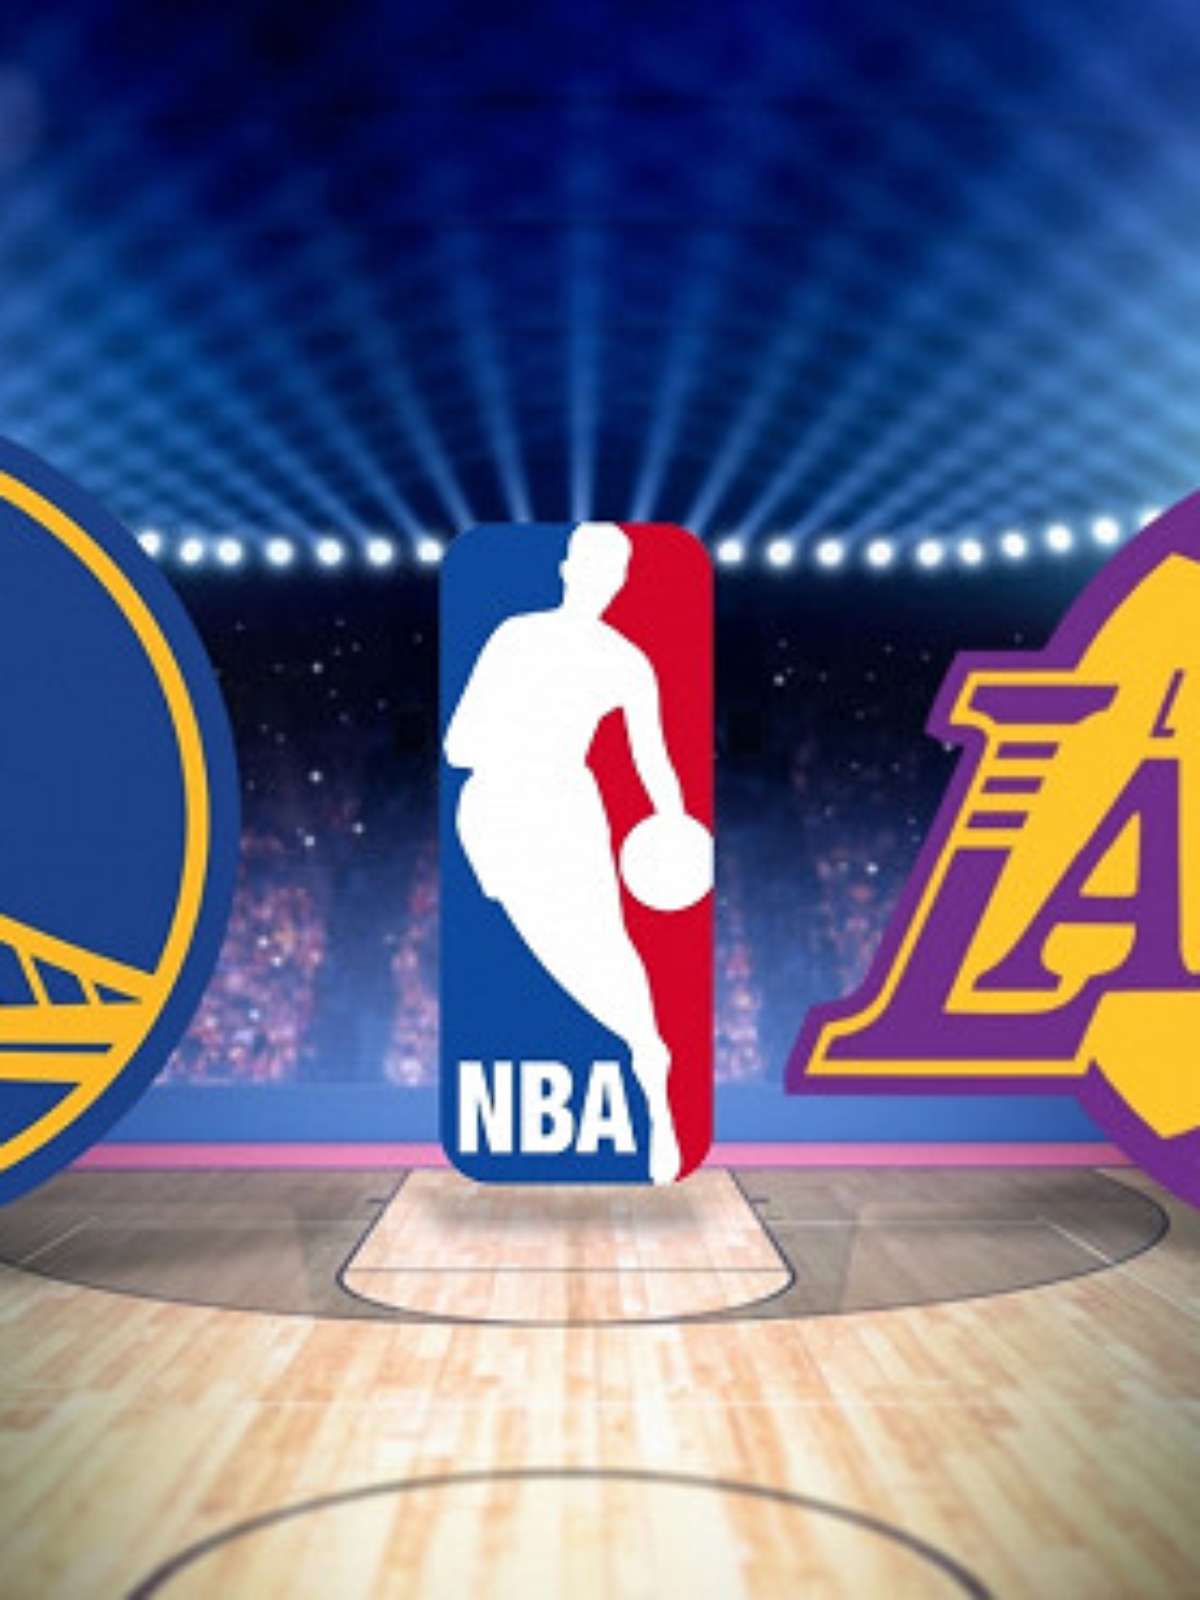 Onde assistir NBA: Los Angeles Lakers x Golden State Warriors – Jogo 2